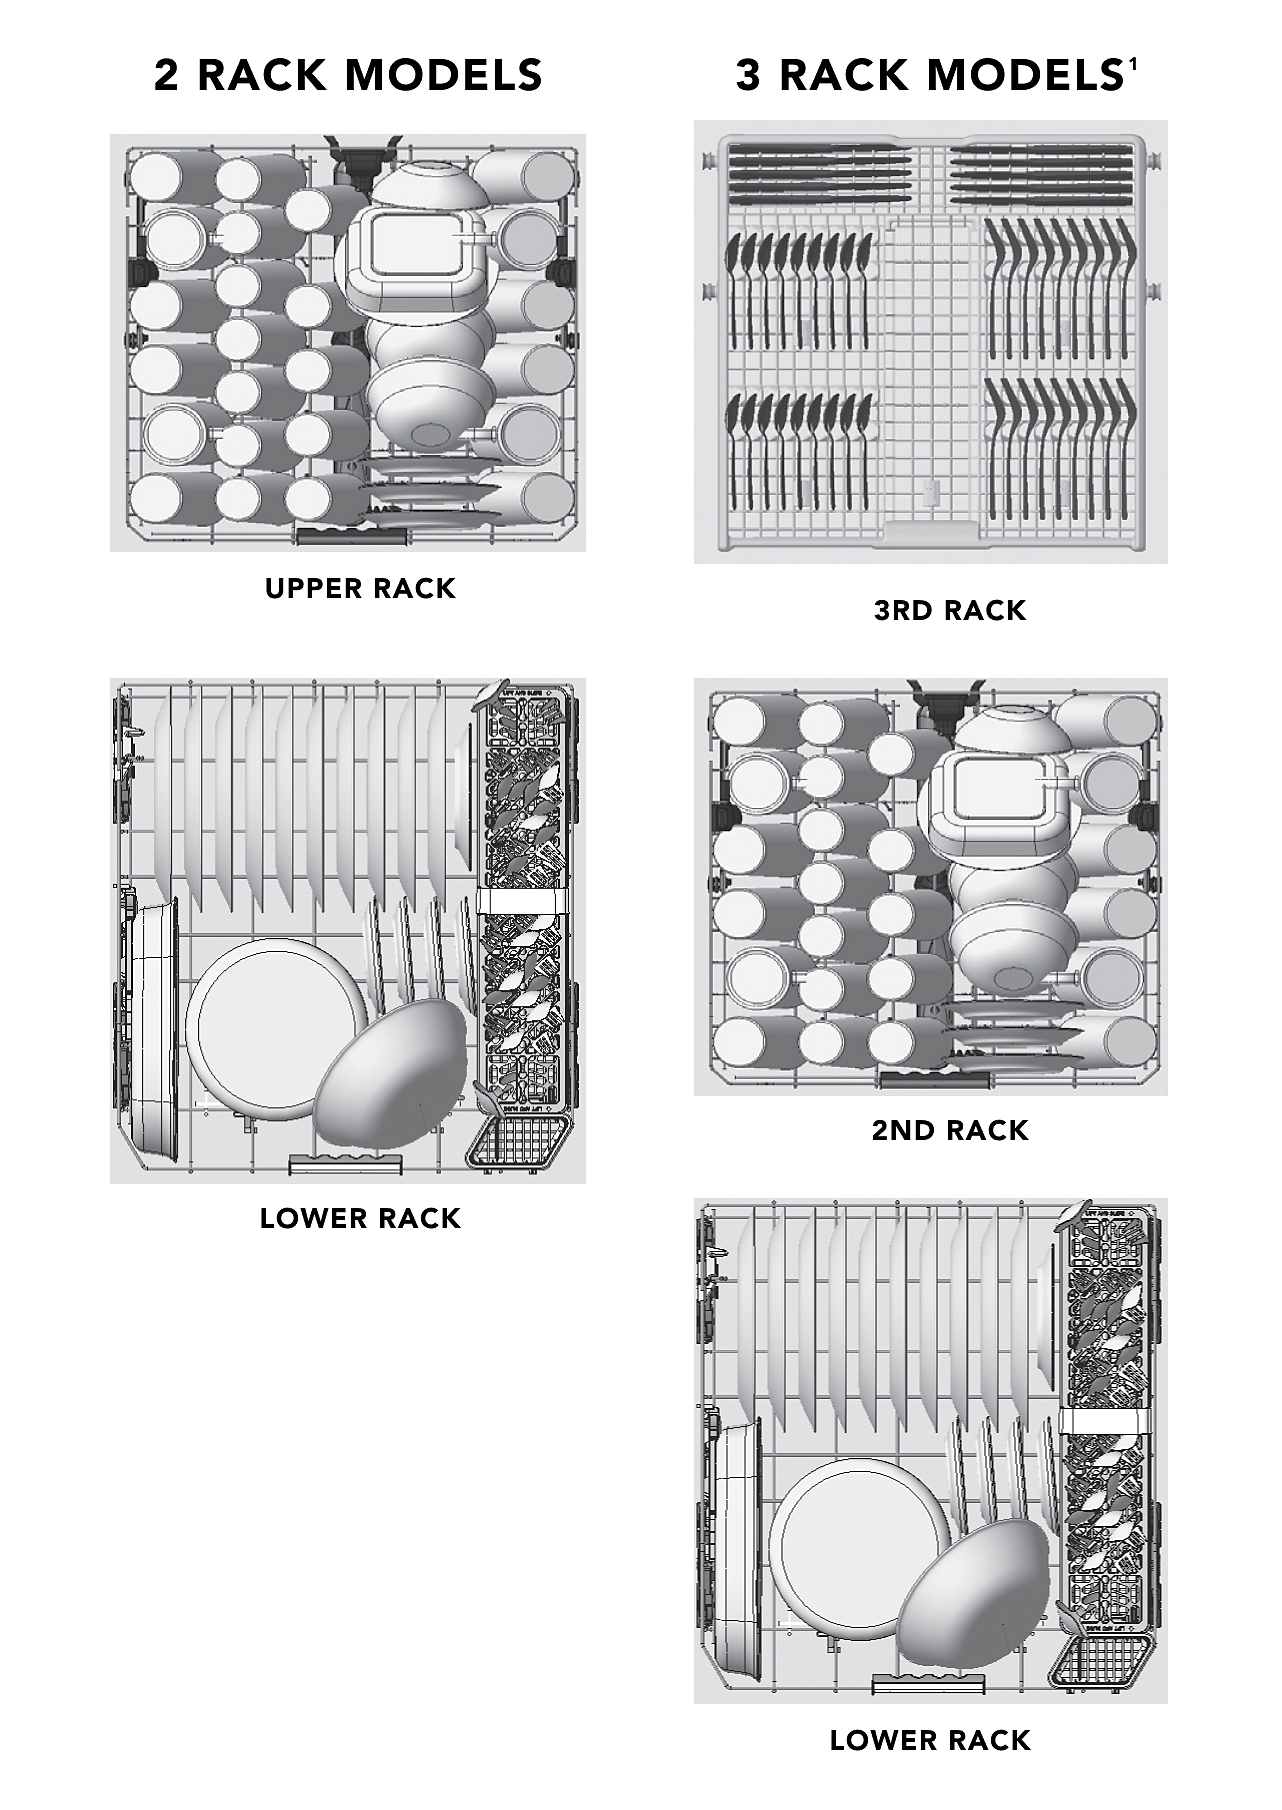 Illustration of a properly loaded dishwasher